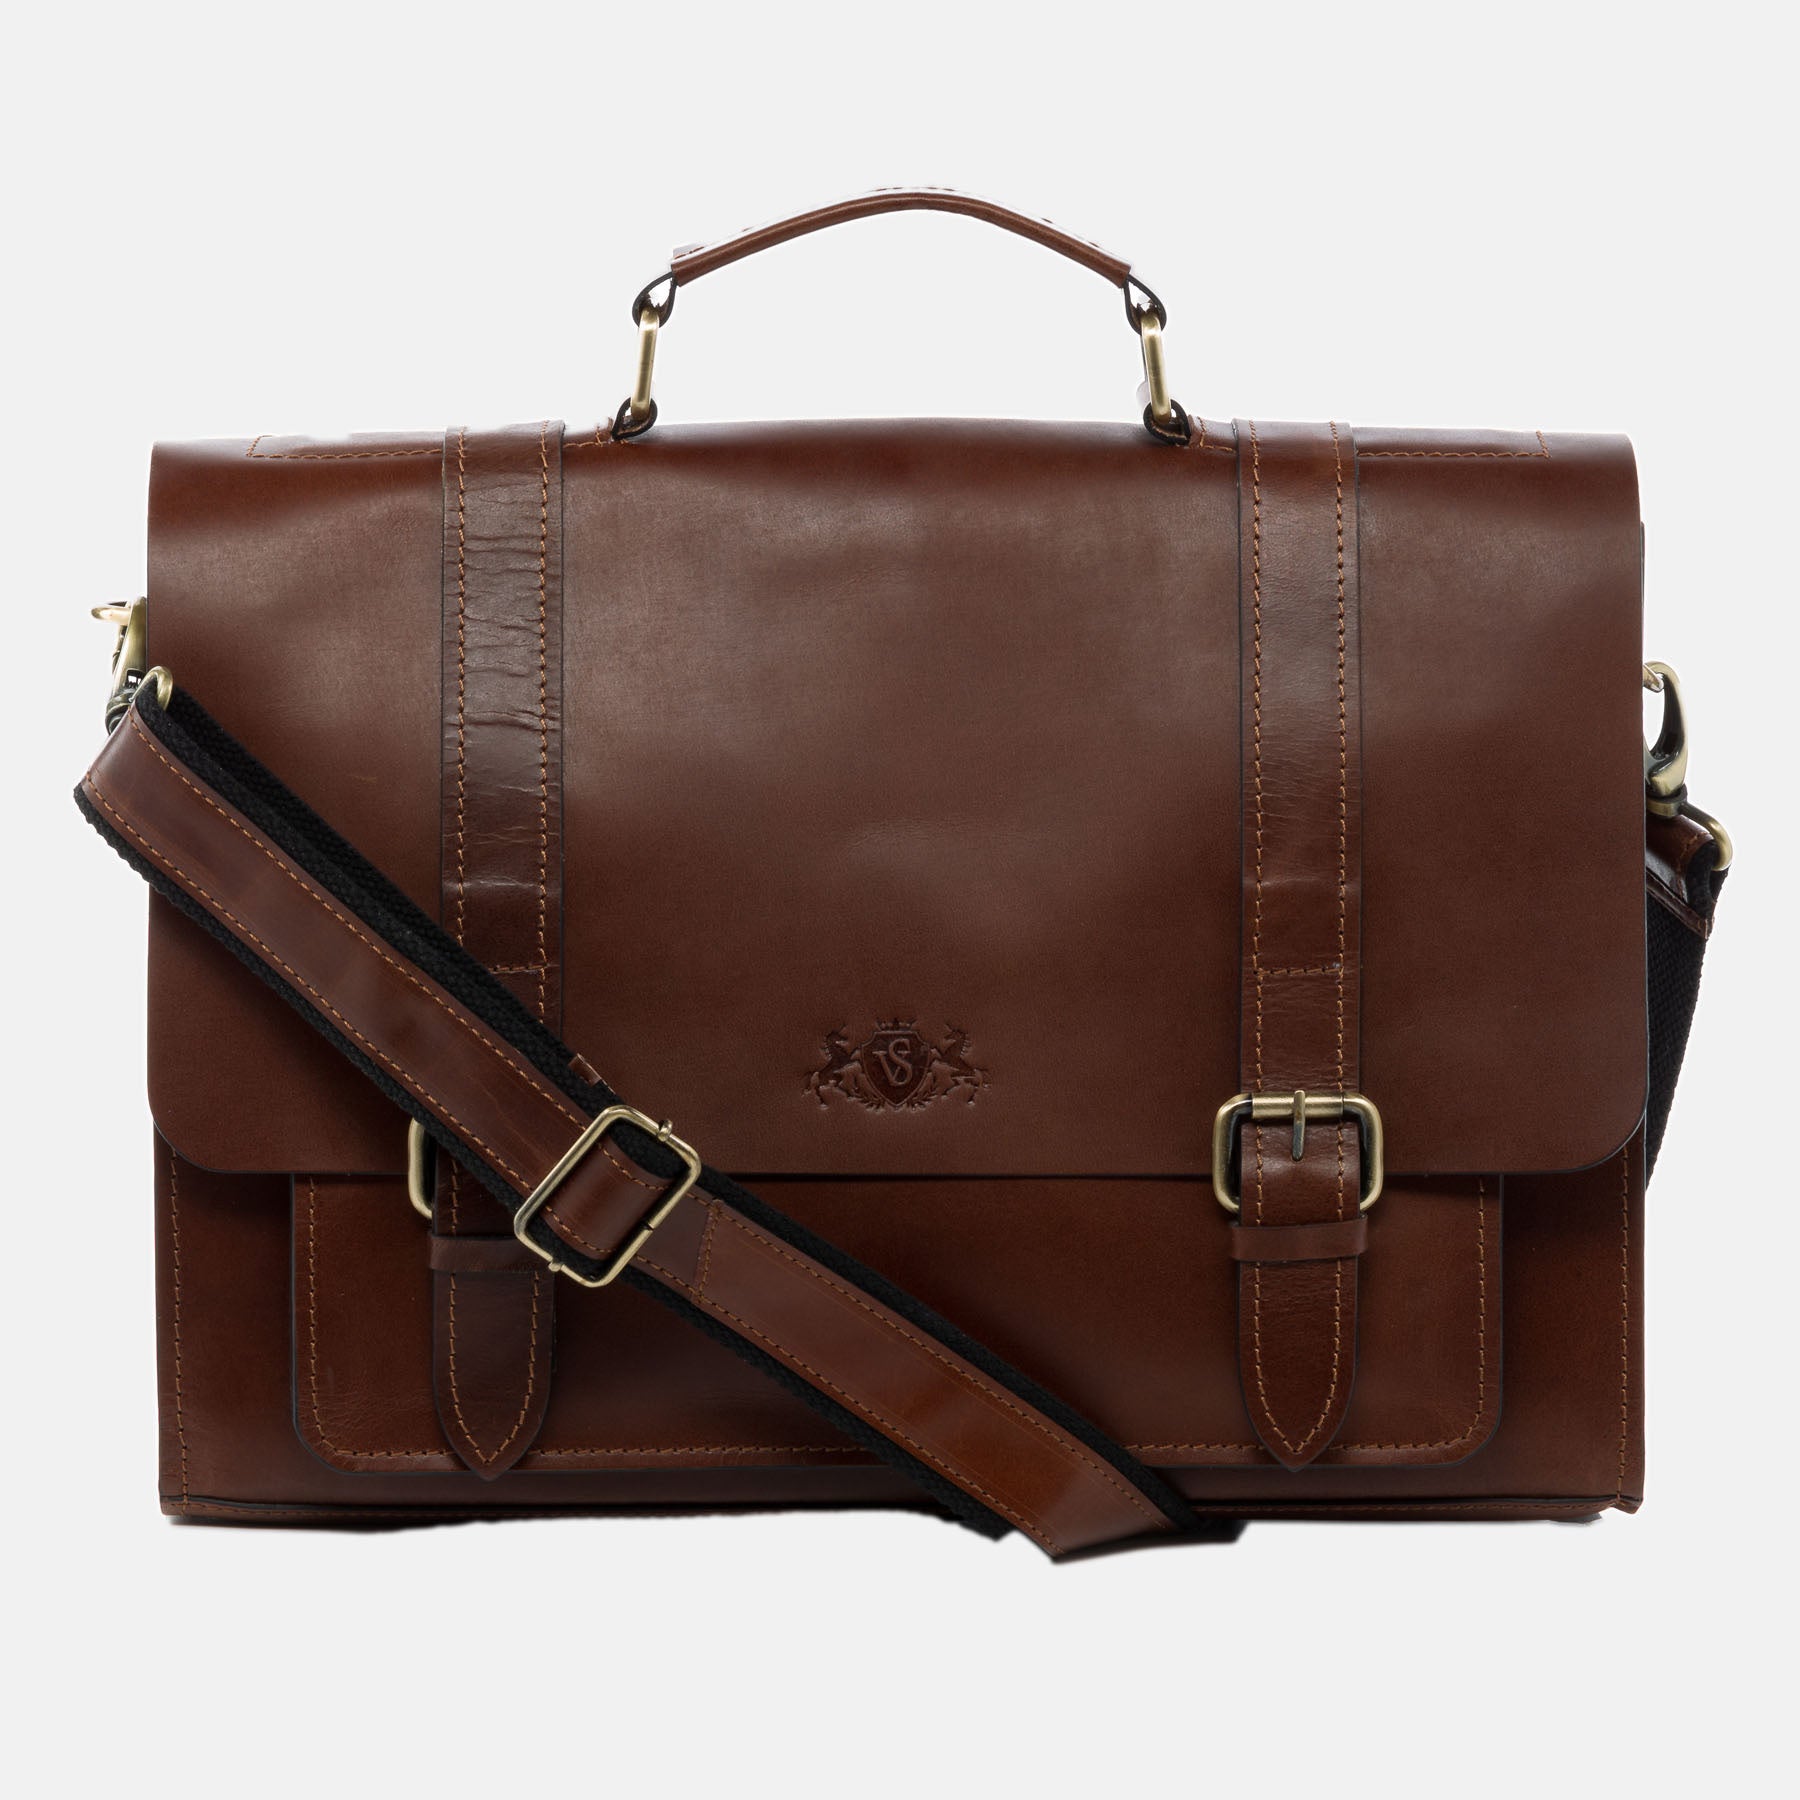 Briefcase BRISTOL saddle leather brown